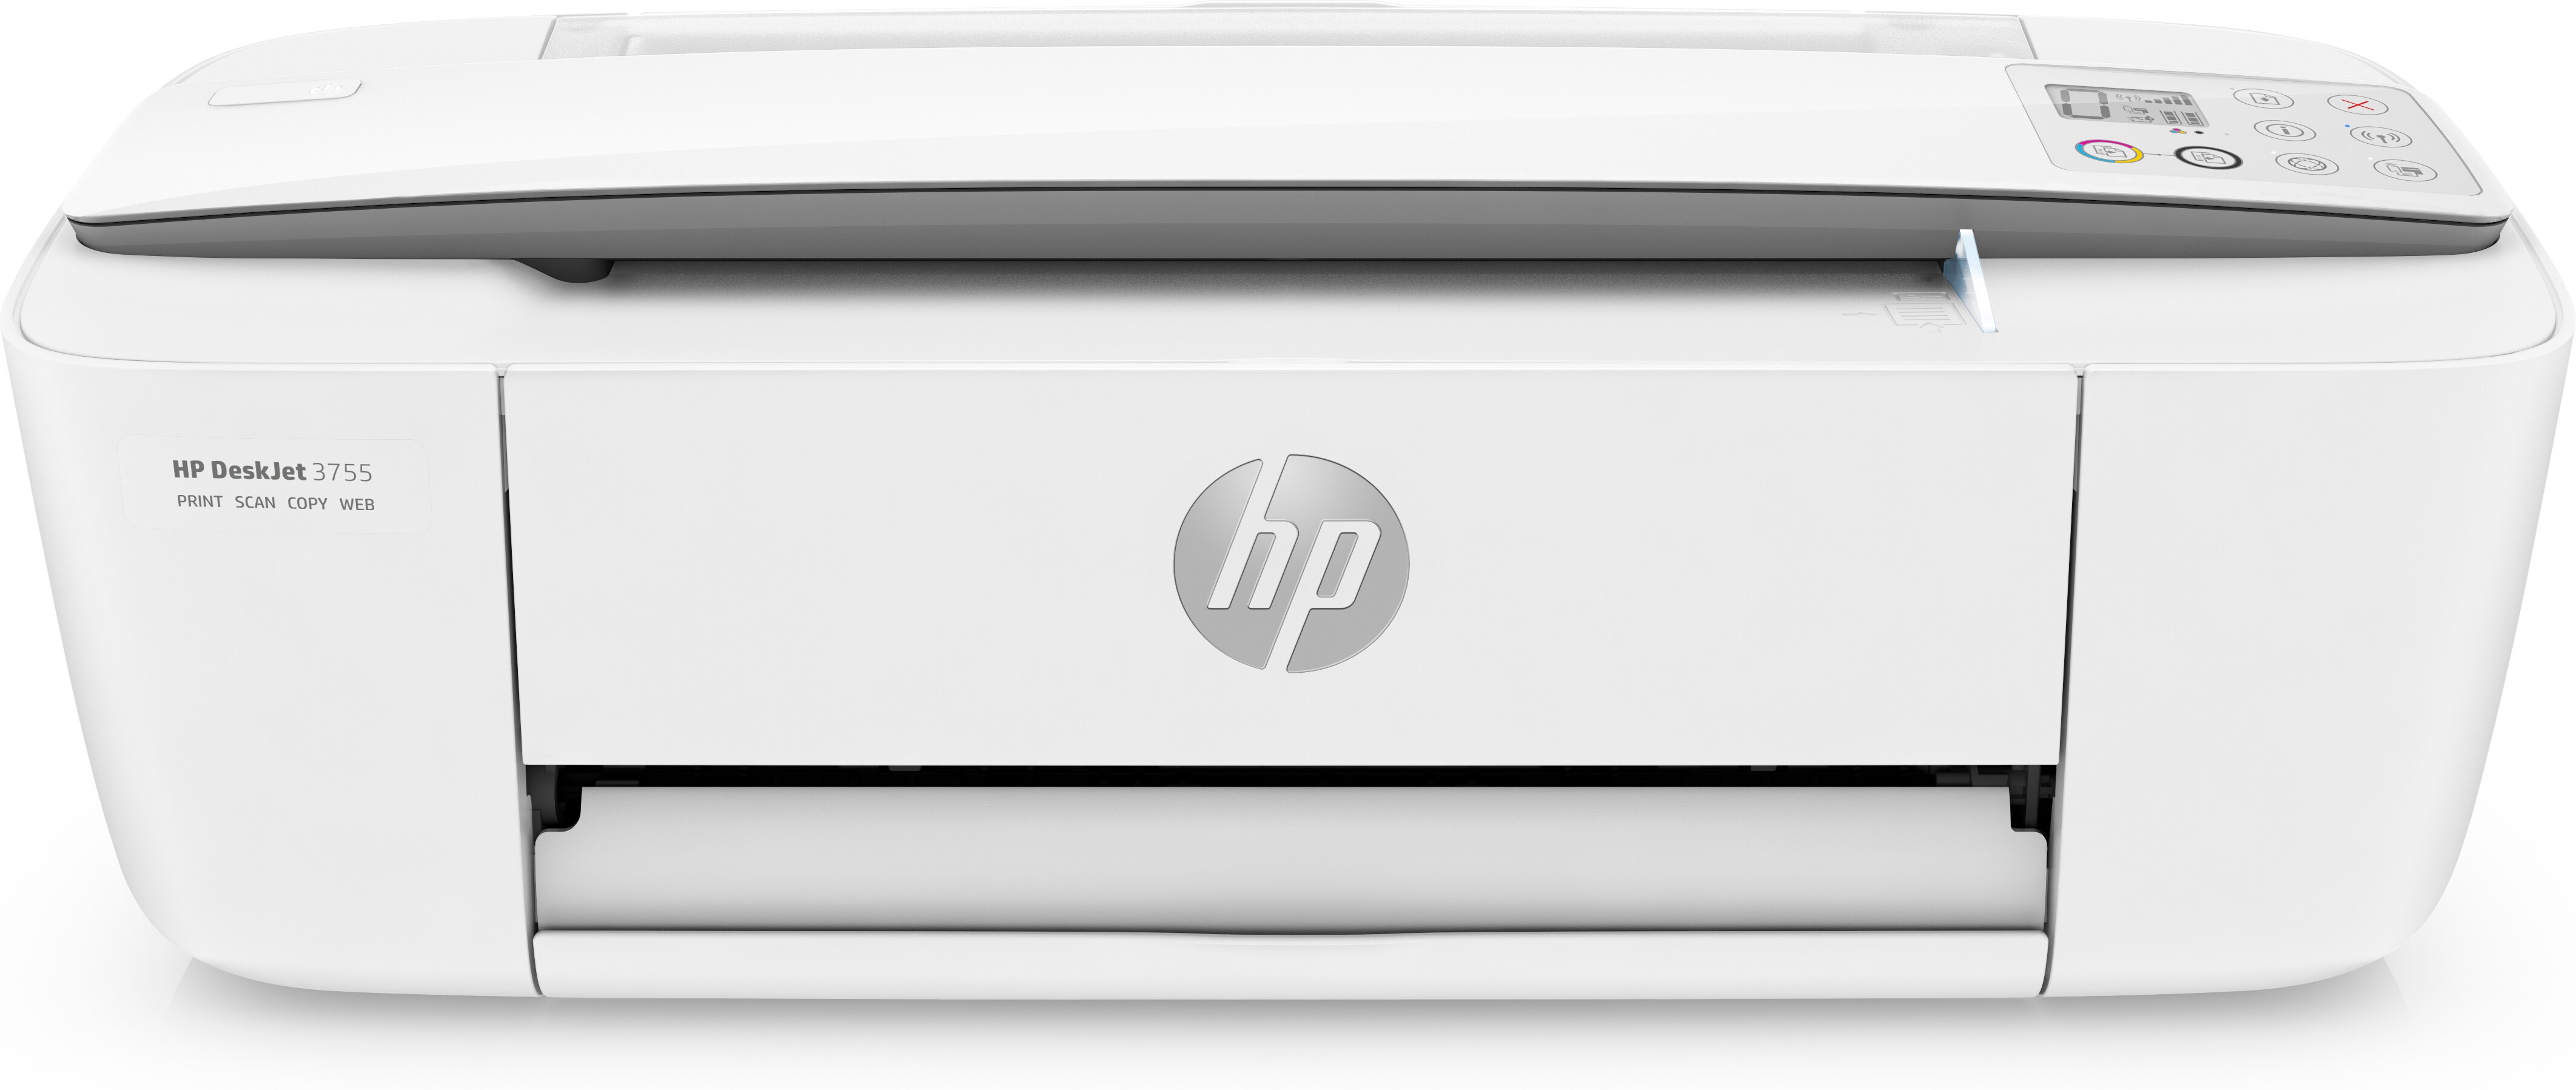 HP DeskJet 3755 All-in-One Inkjet Printer, Color Mobile Print, Copy, Scan, - image 2 of 7